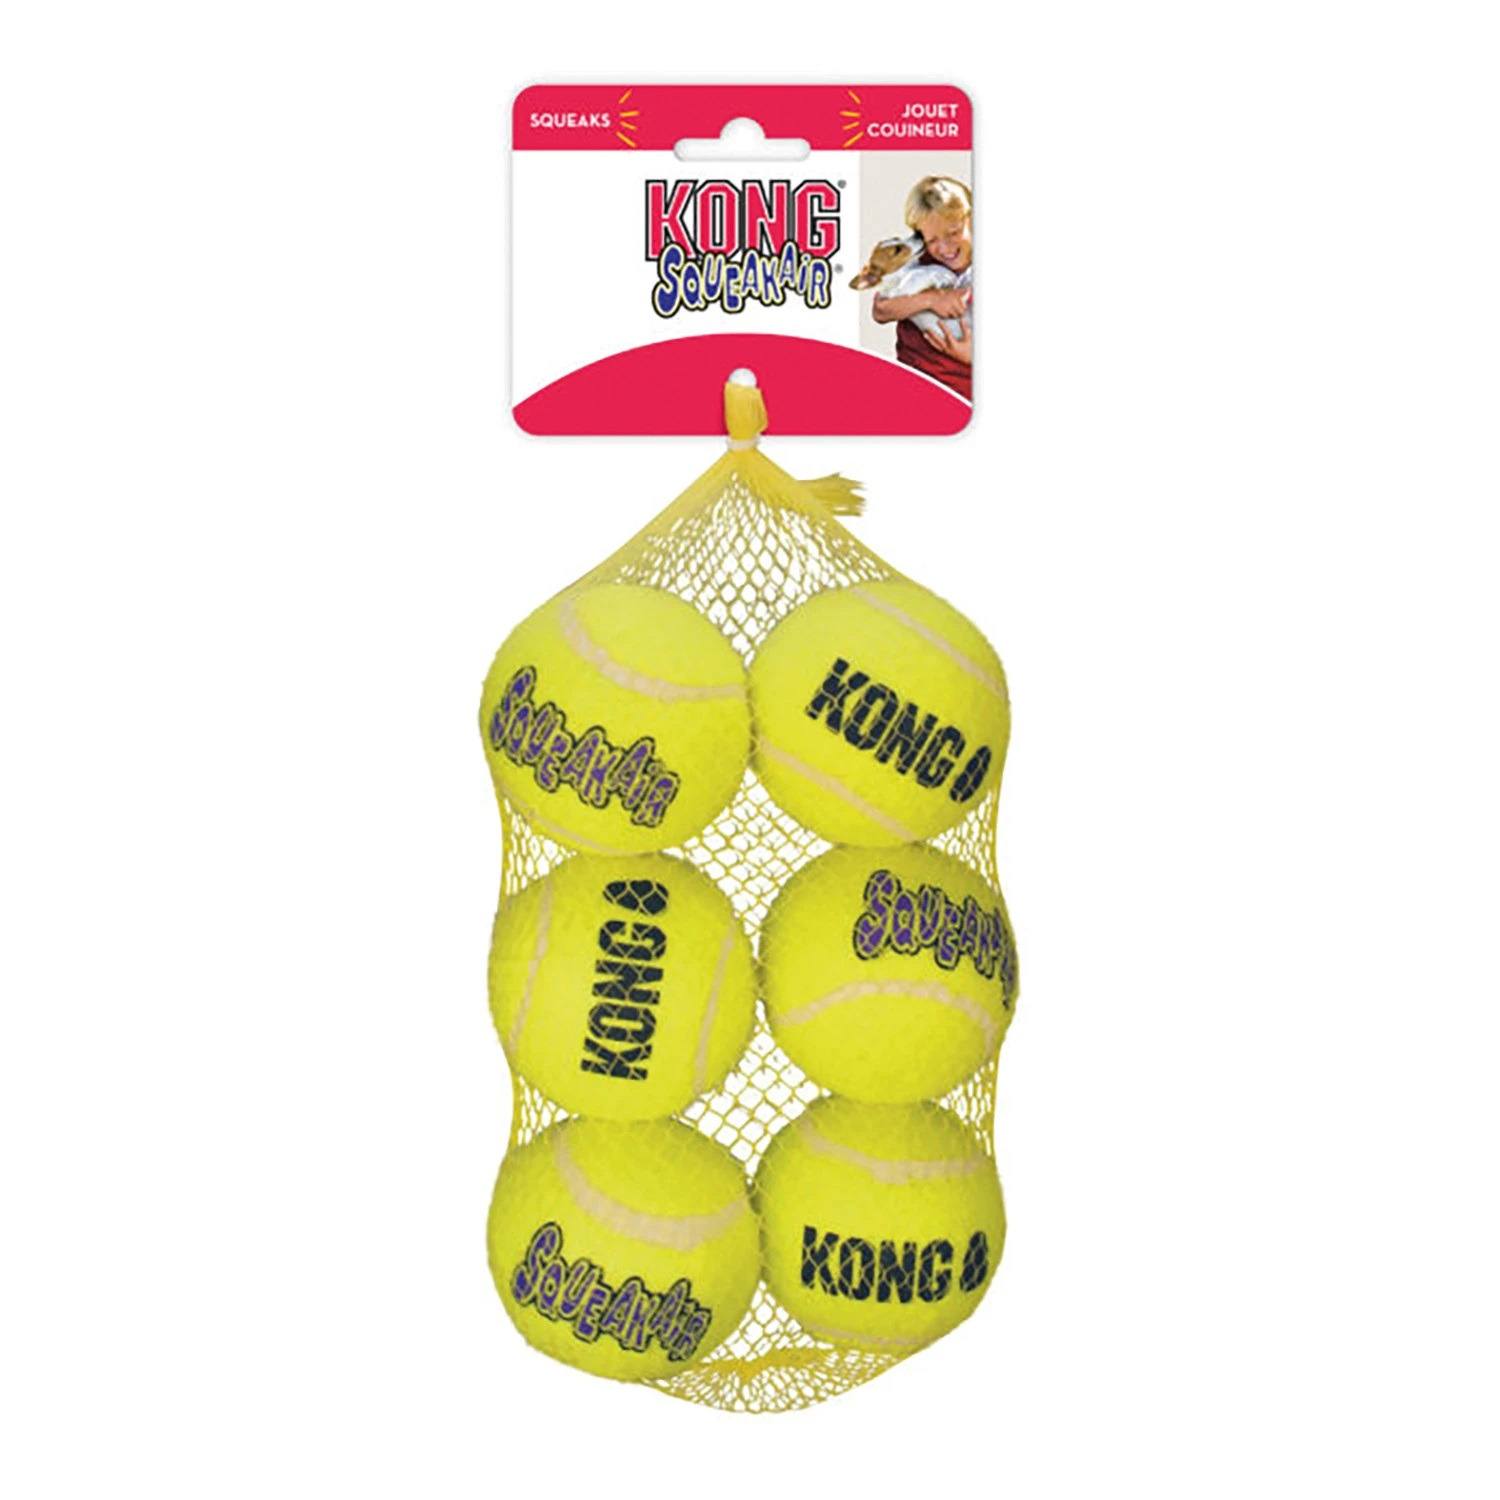 KONG AirDog Squeakair Ball Dog Toy